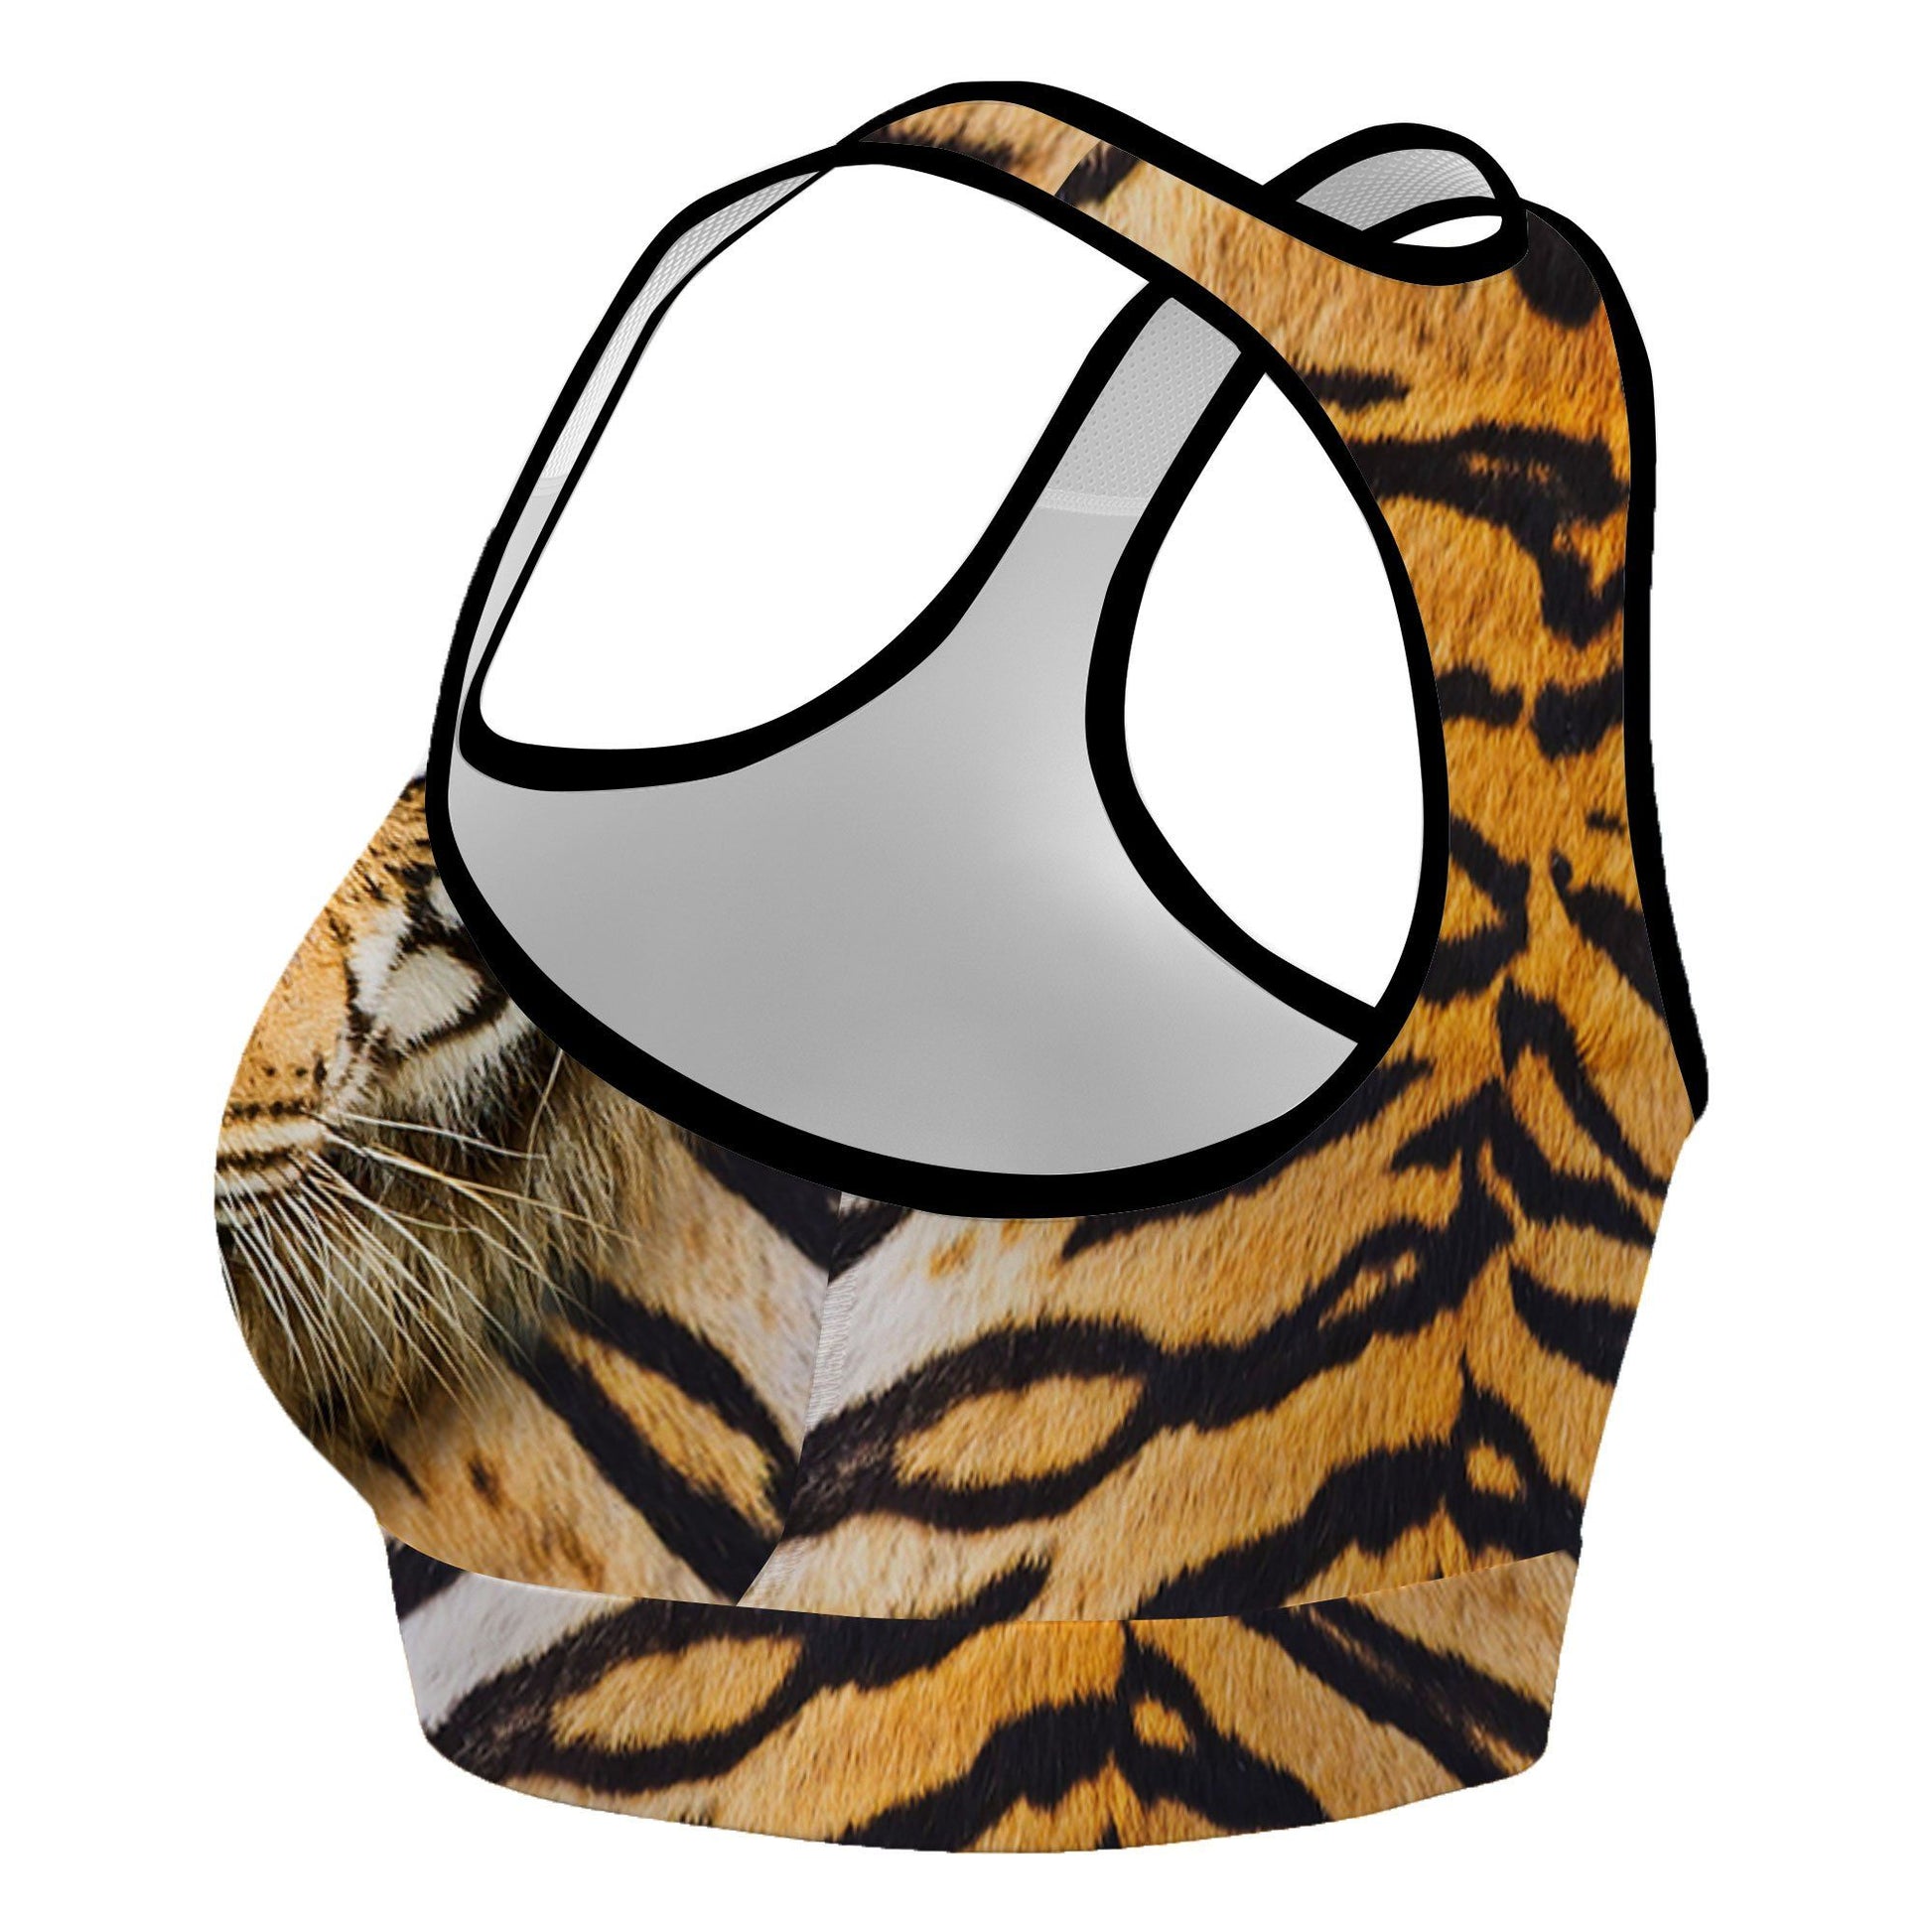 Gearhuman 3D Tiger Bra